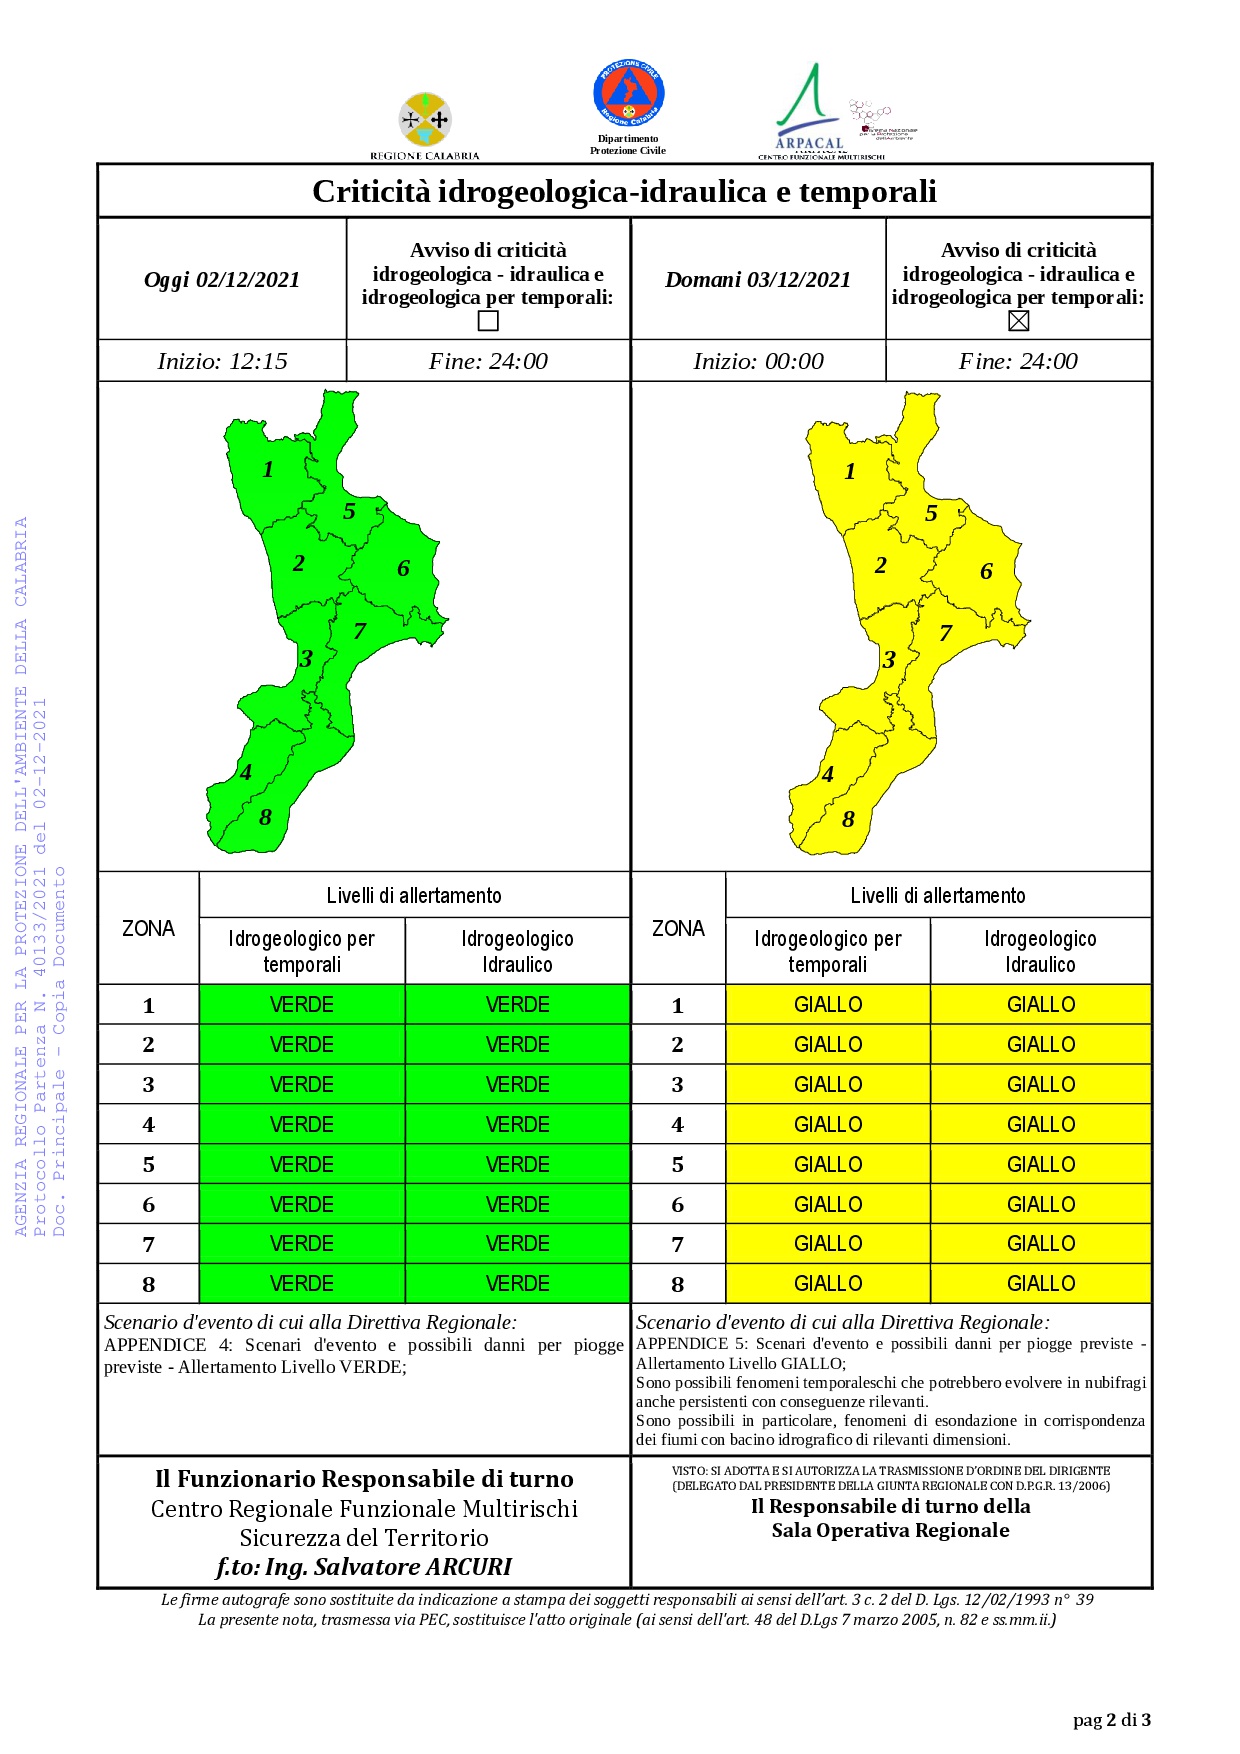 Criticità idrogeologica-idraulica e temporali in Calabria 02-12-2021